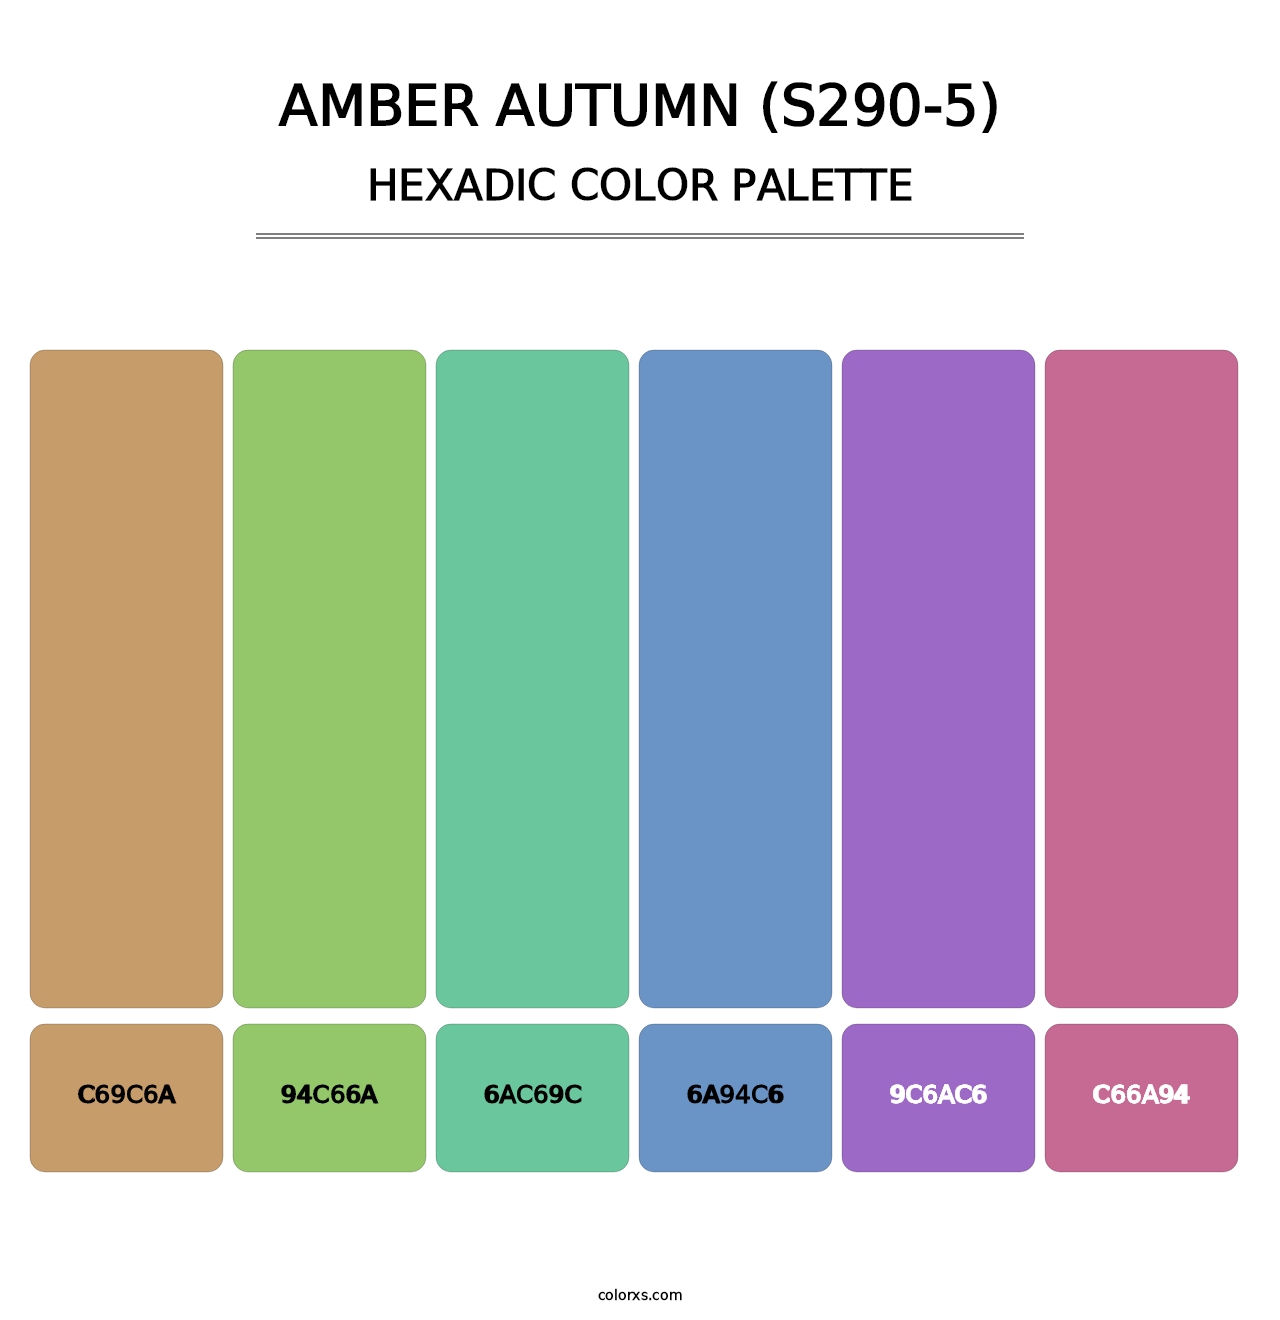 Amber Autumn (S290-5) - Hexadic Color Palette